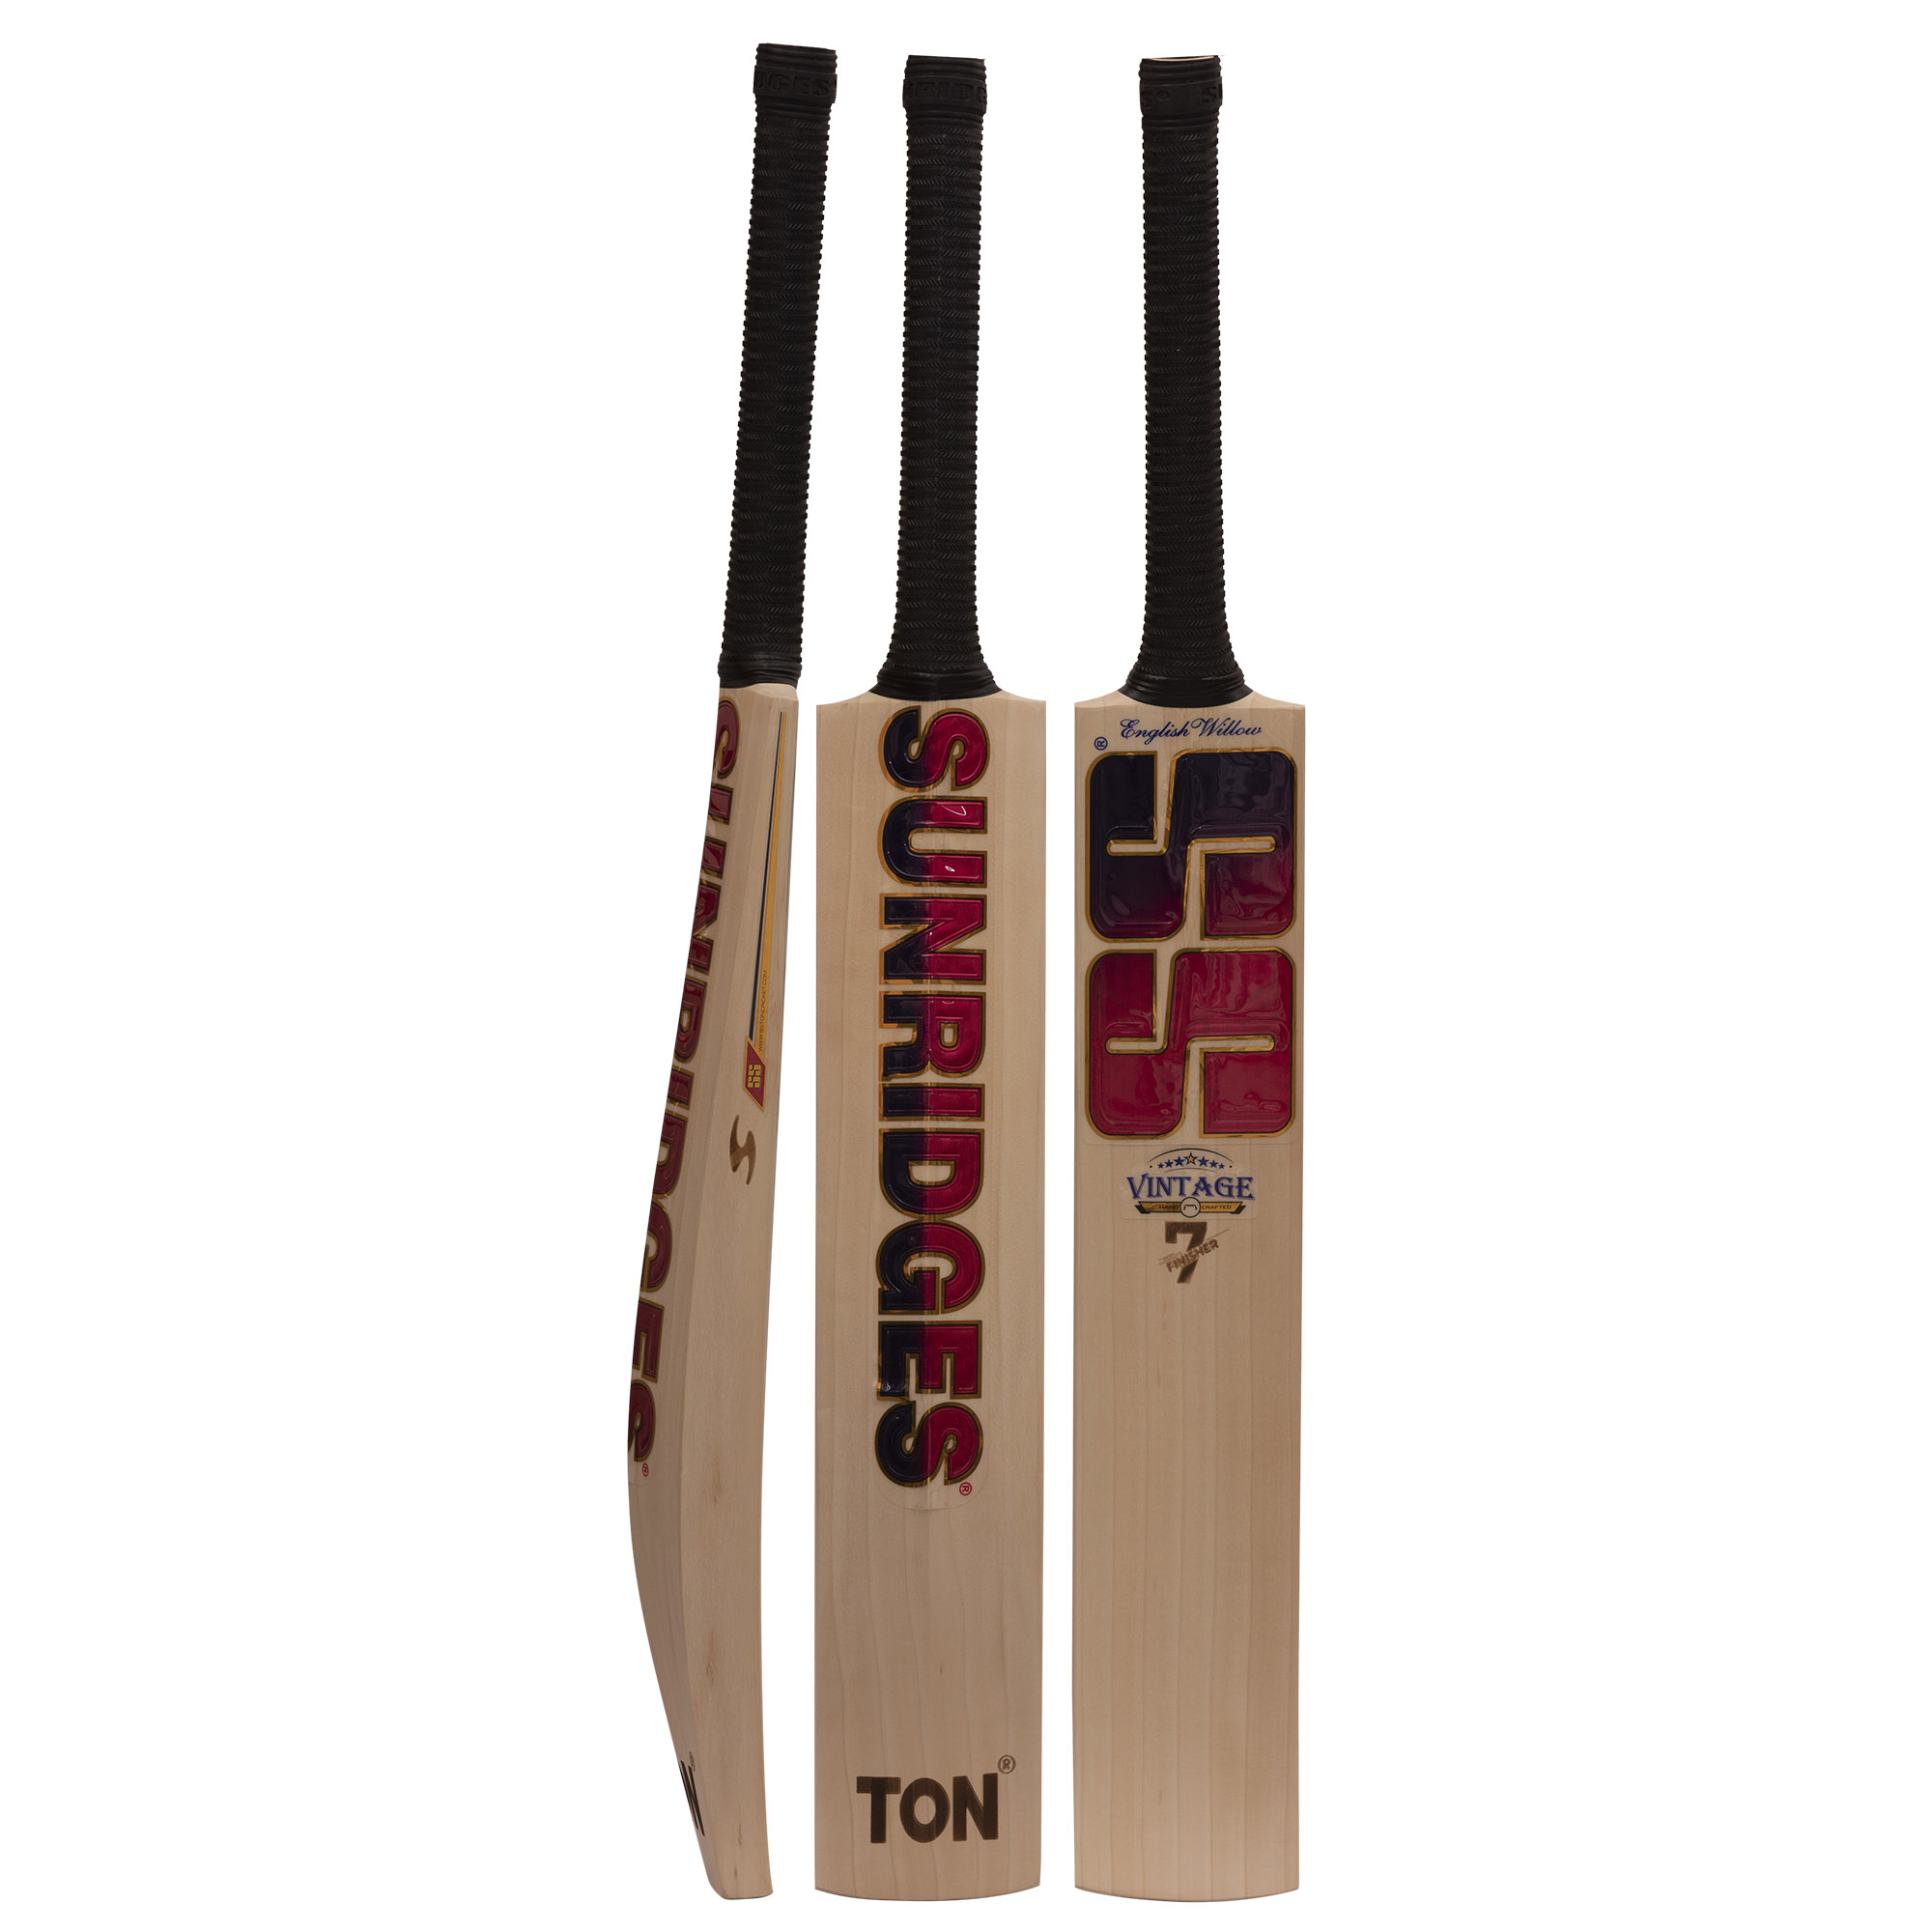 SS-Vintage-Finisher-7-Cricket-Bat